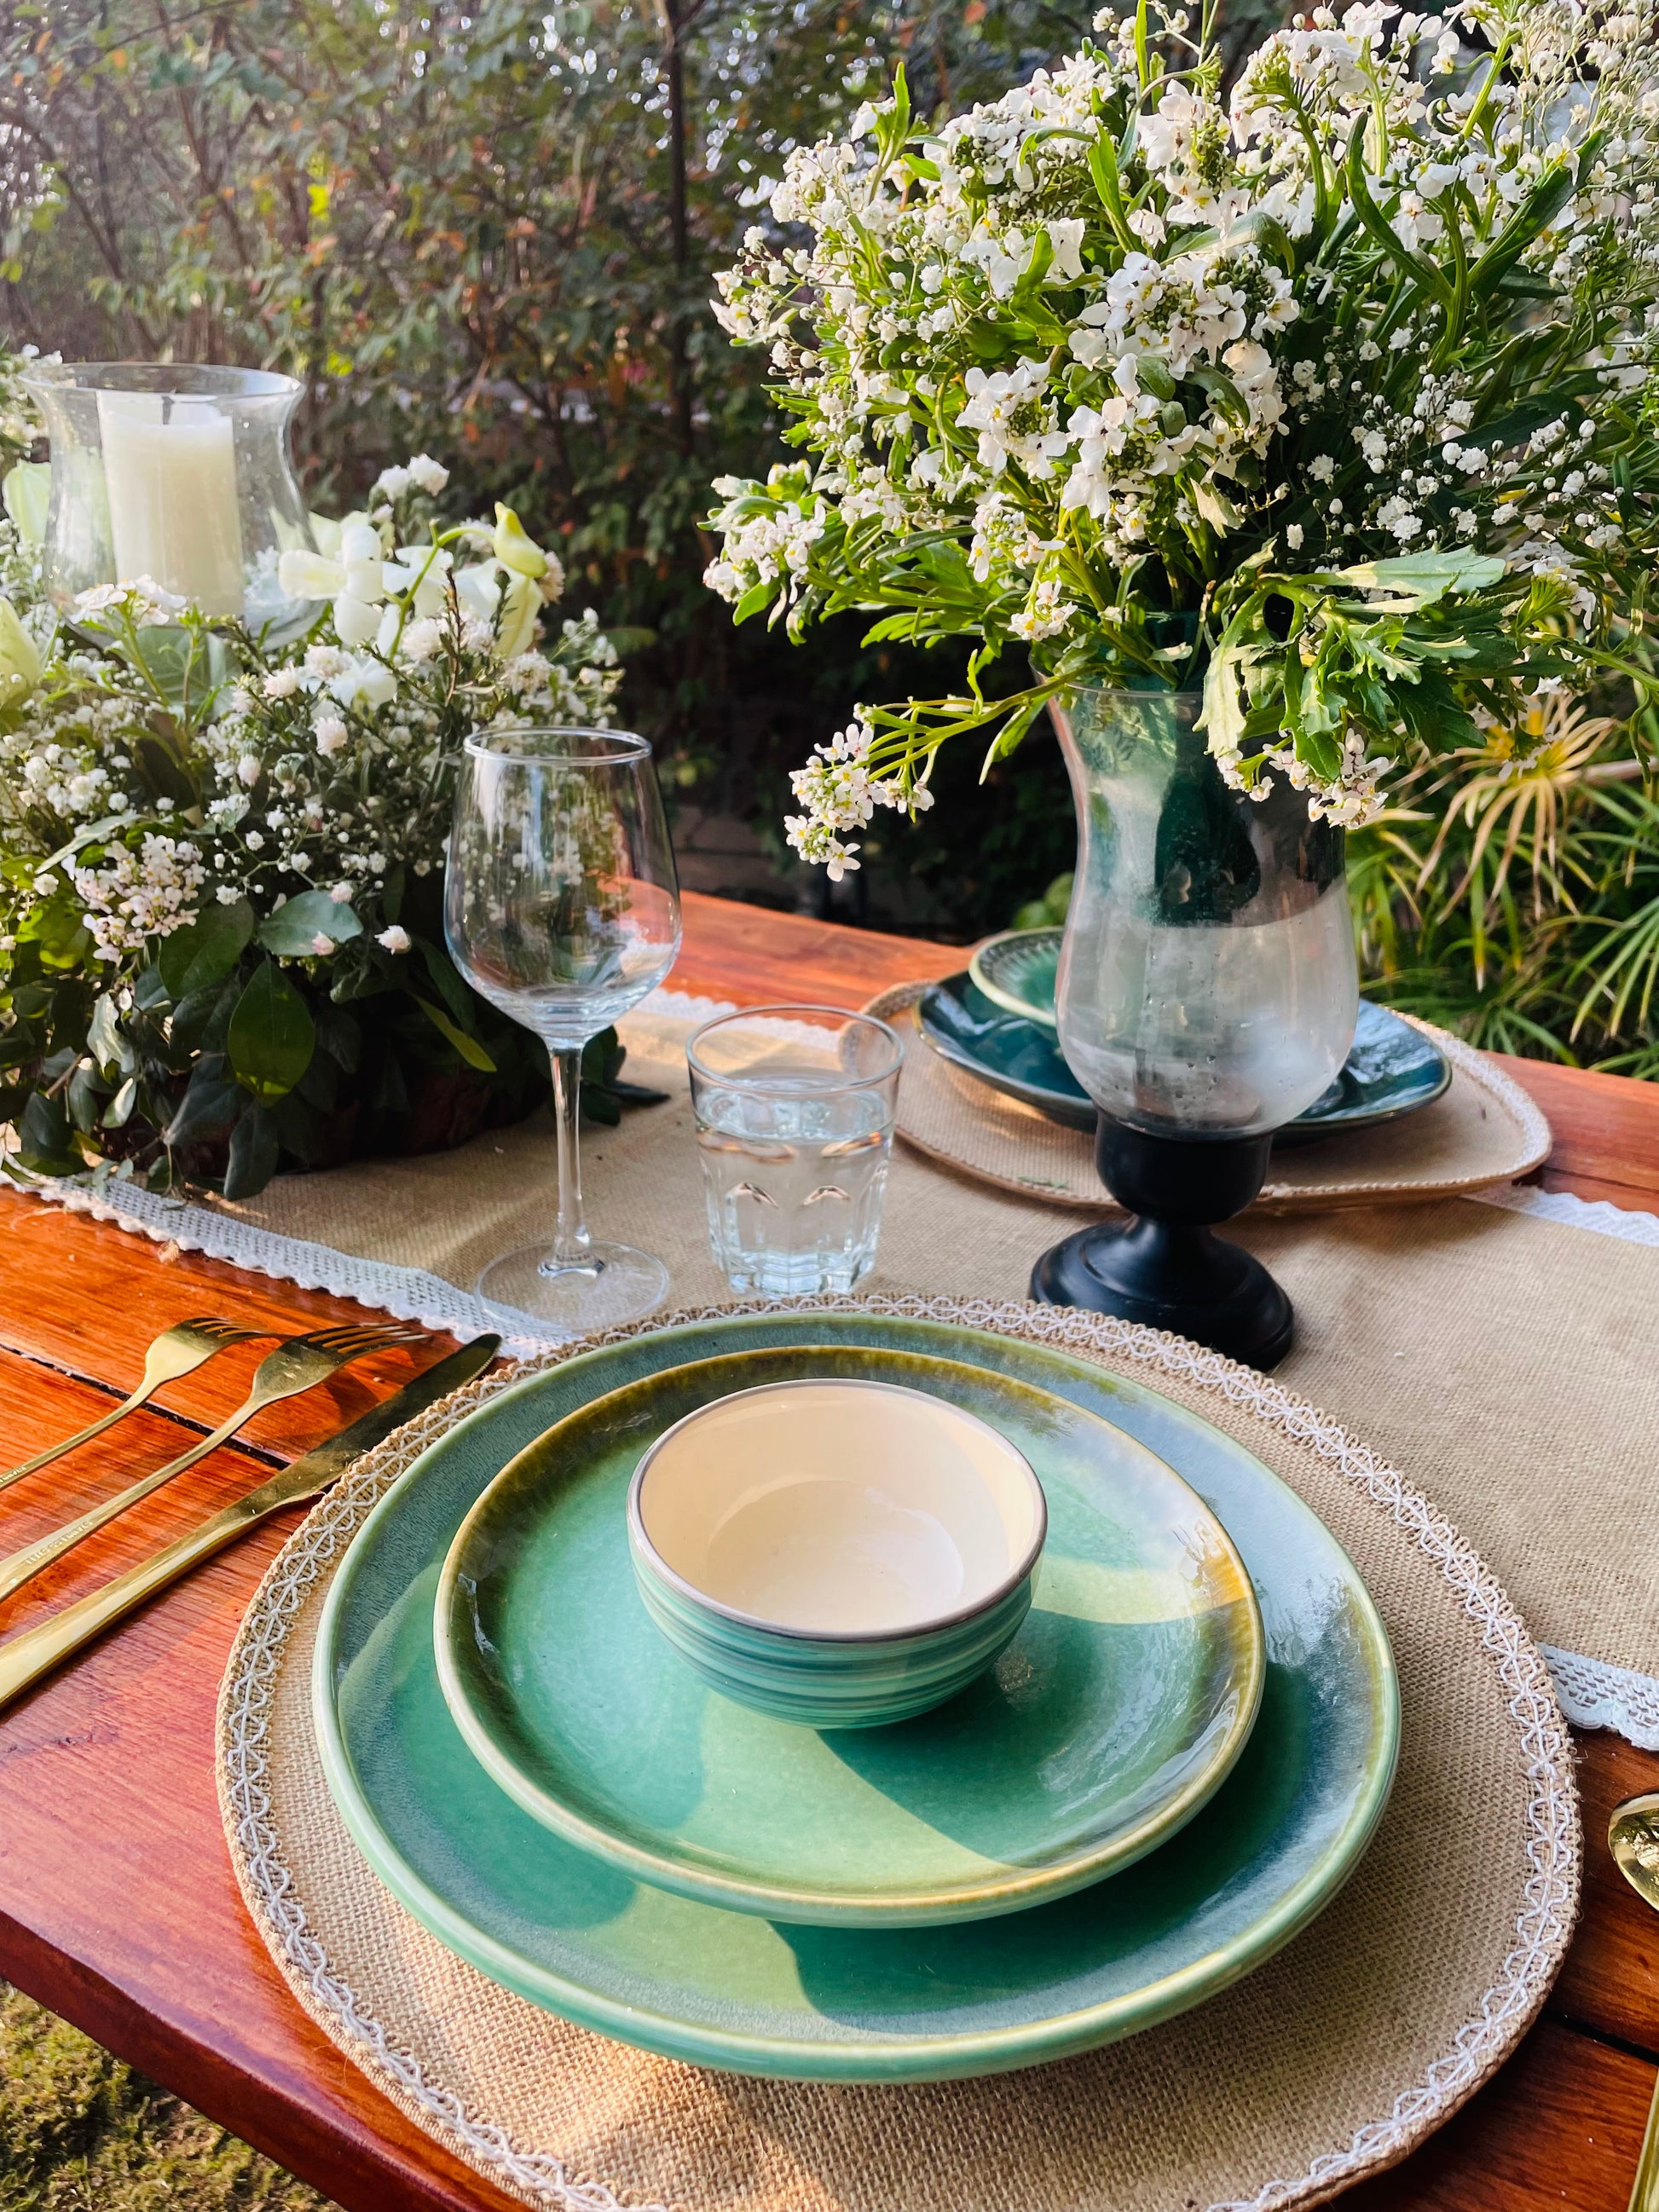 Dining Decor Enhancement, Dining Setup Enhancement, Green Plate Set, Parna Turquoise Blue Green Plate Set, Retro Design, Royal Dining Set, Rustic Feel, Turquoise Blue Plate Set, Uneven Textures, tesu